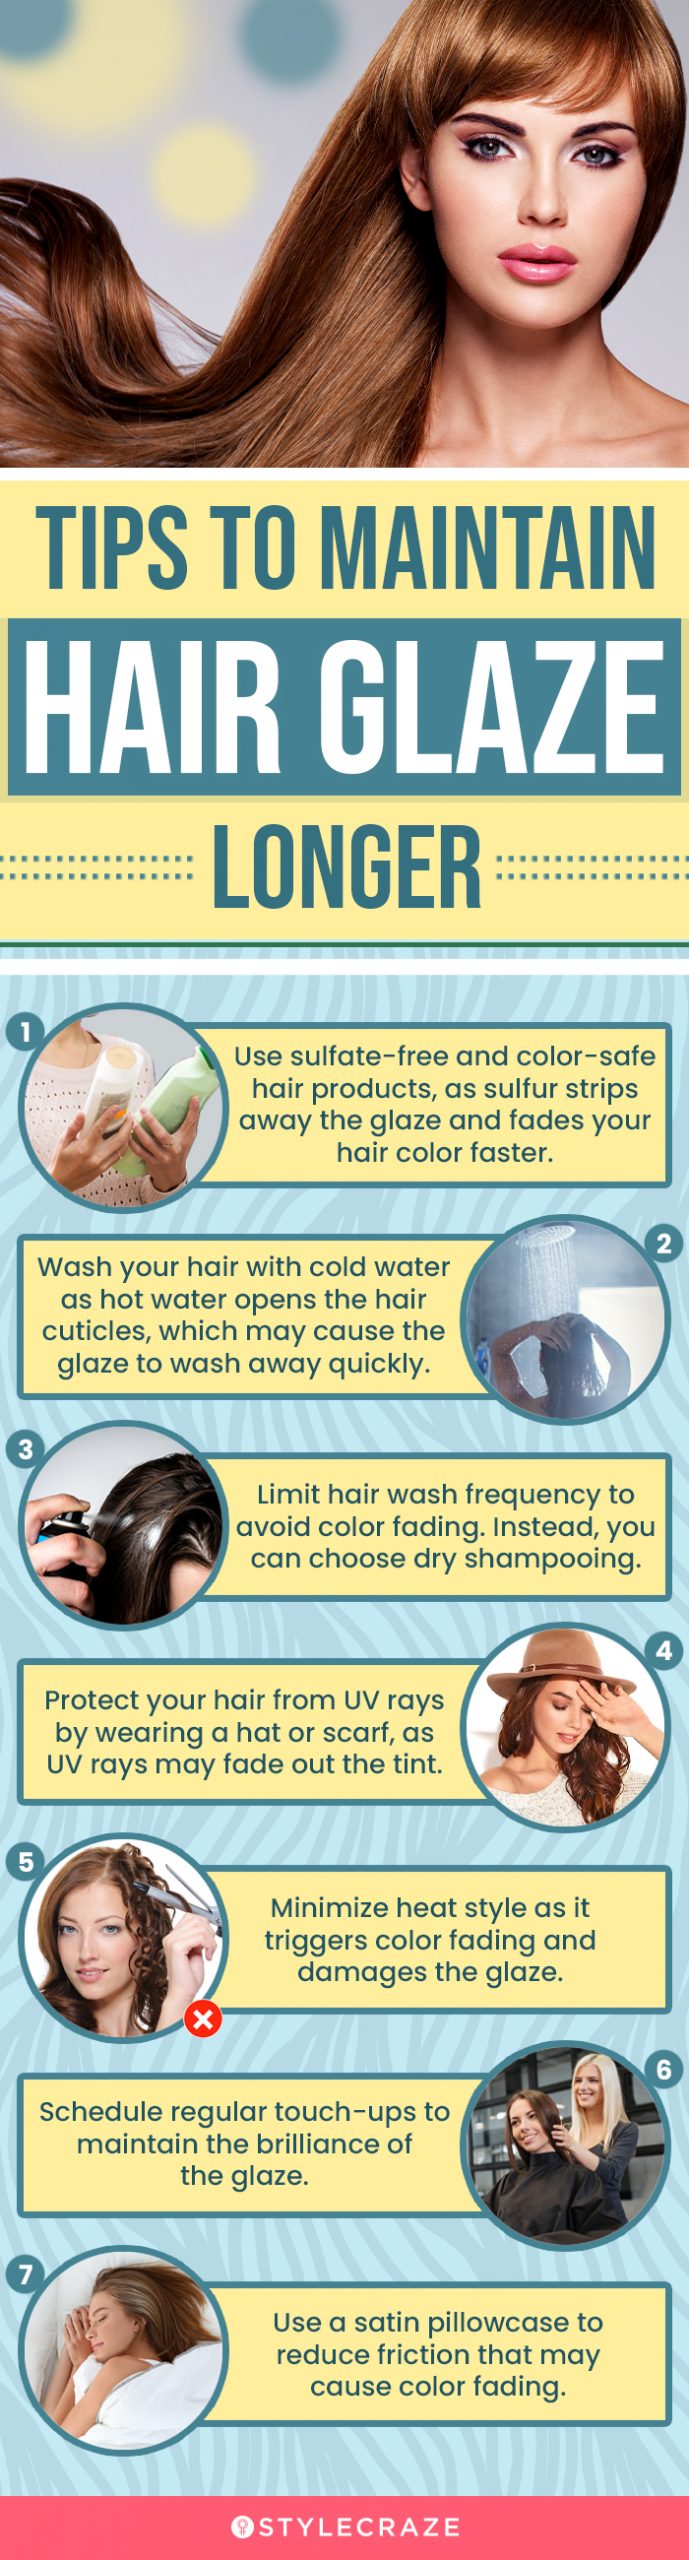 Tips To Maintain Hair Glaze Longer (infographic)